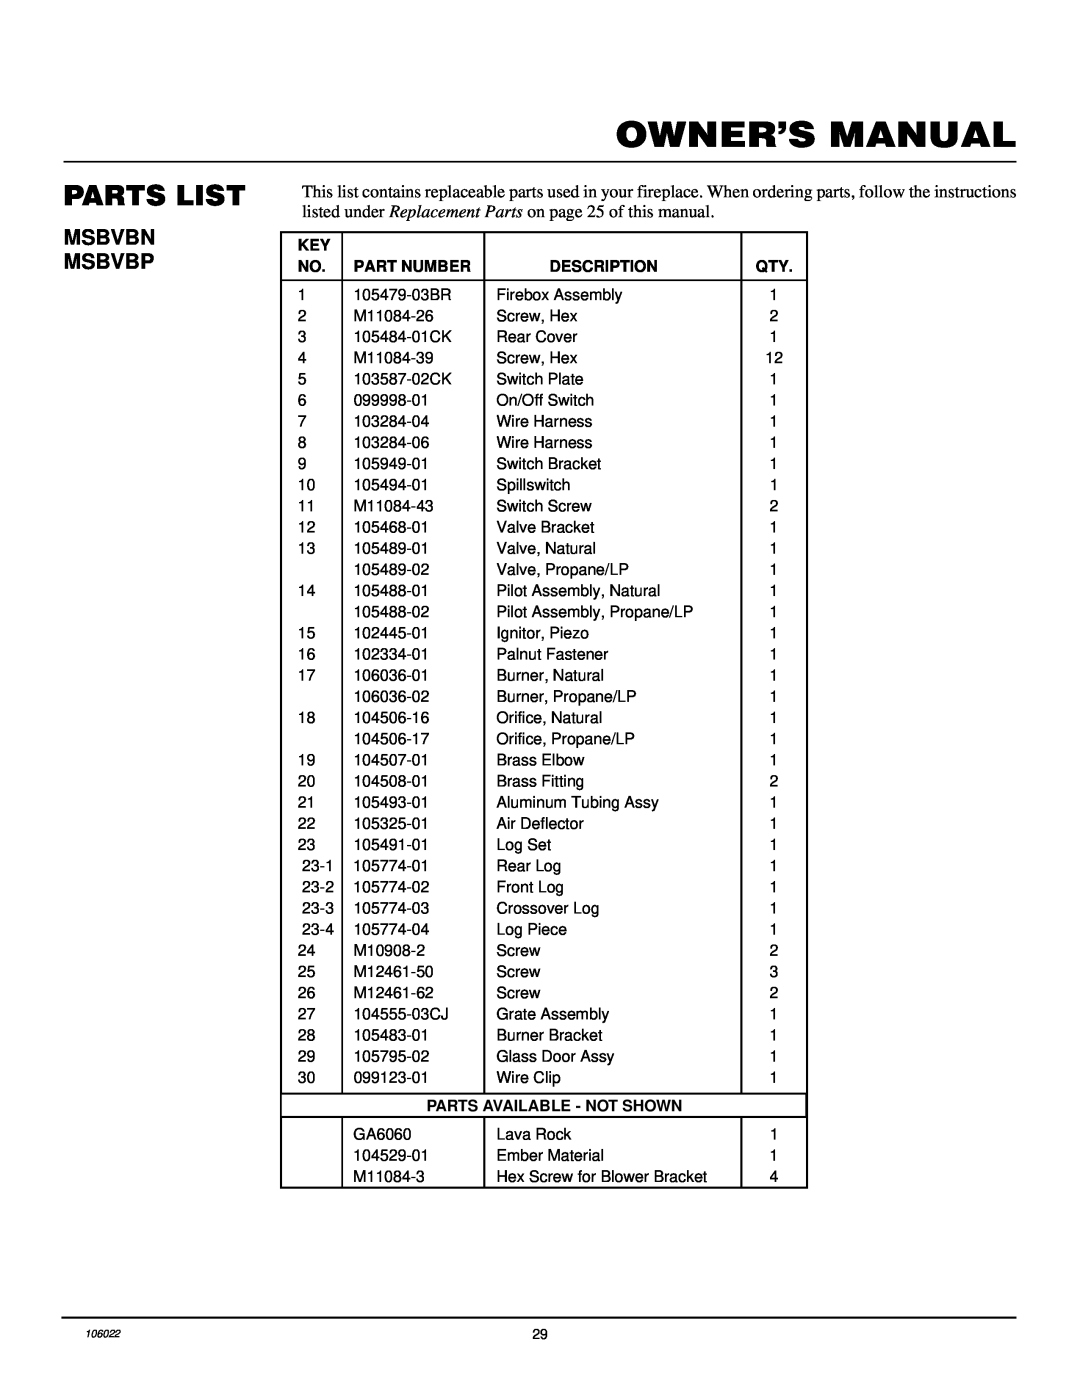 Desa MSBVBN, MSBVBP installation manual Parts List, Msbvbn Msbvbp, Part Number, Description, Parts Available - Not Shown 